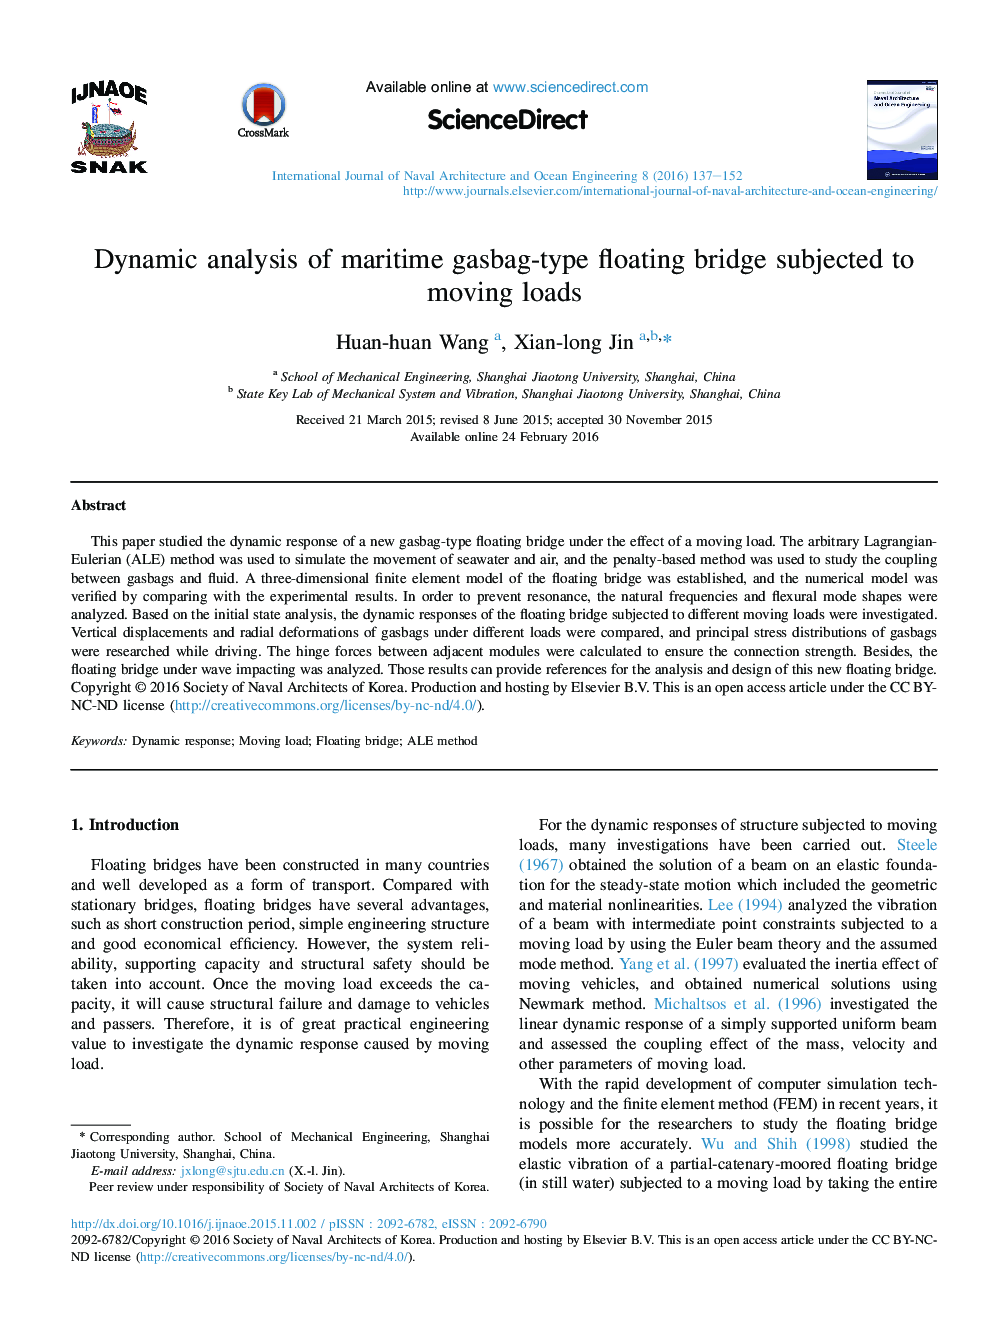 Dynamic analysis of maritime gasbag-type floating bridge subjected to moving loads 